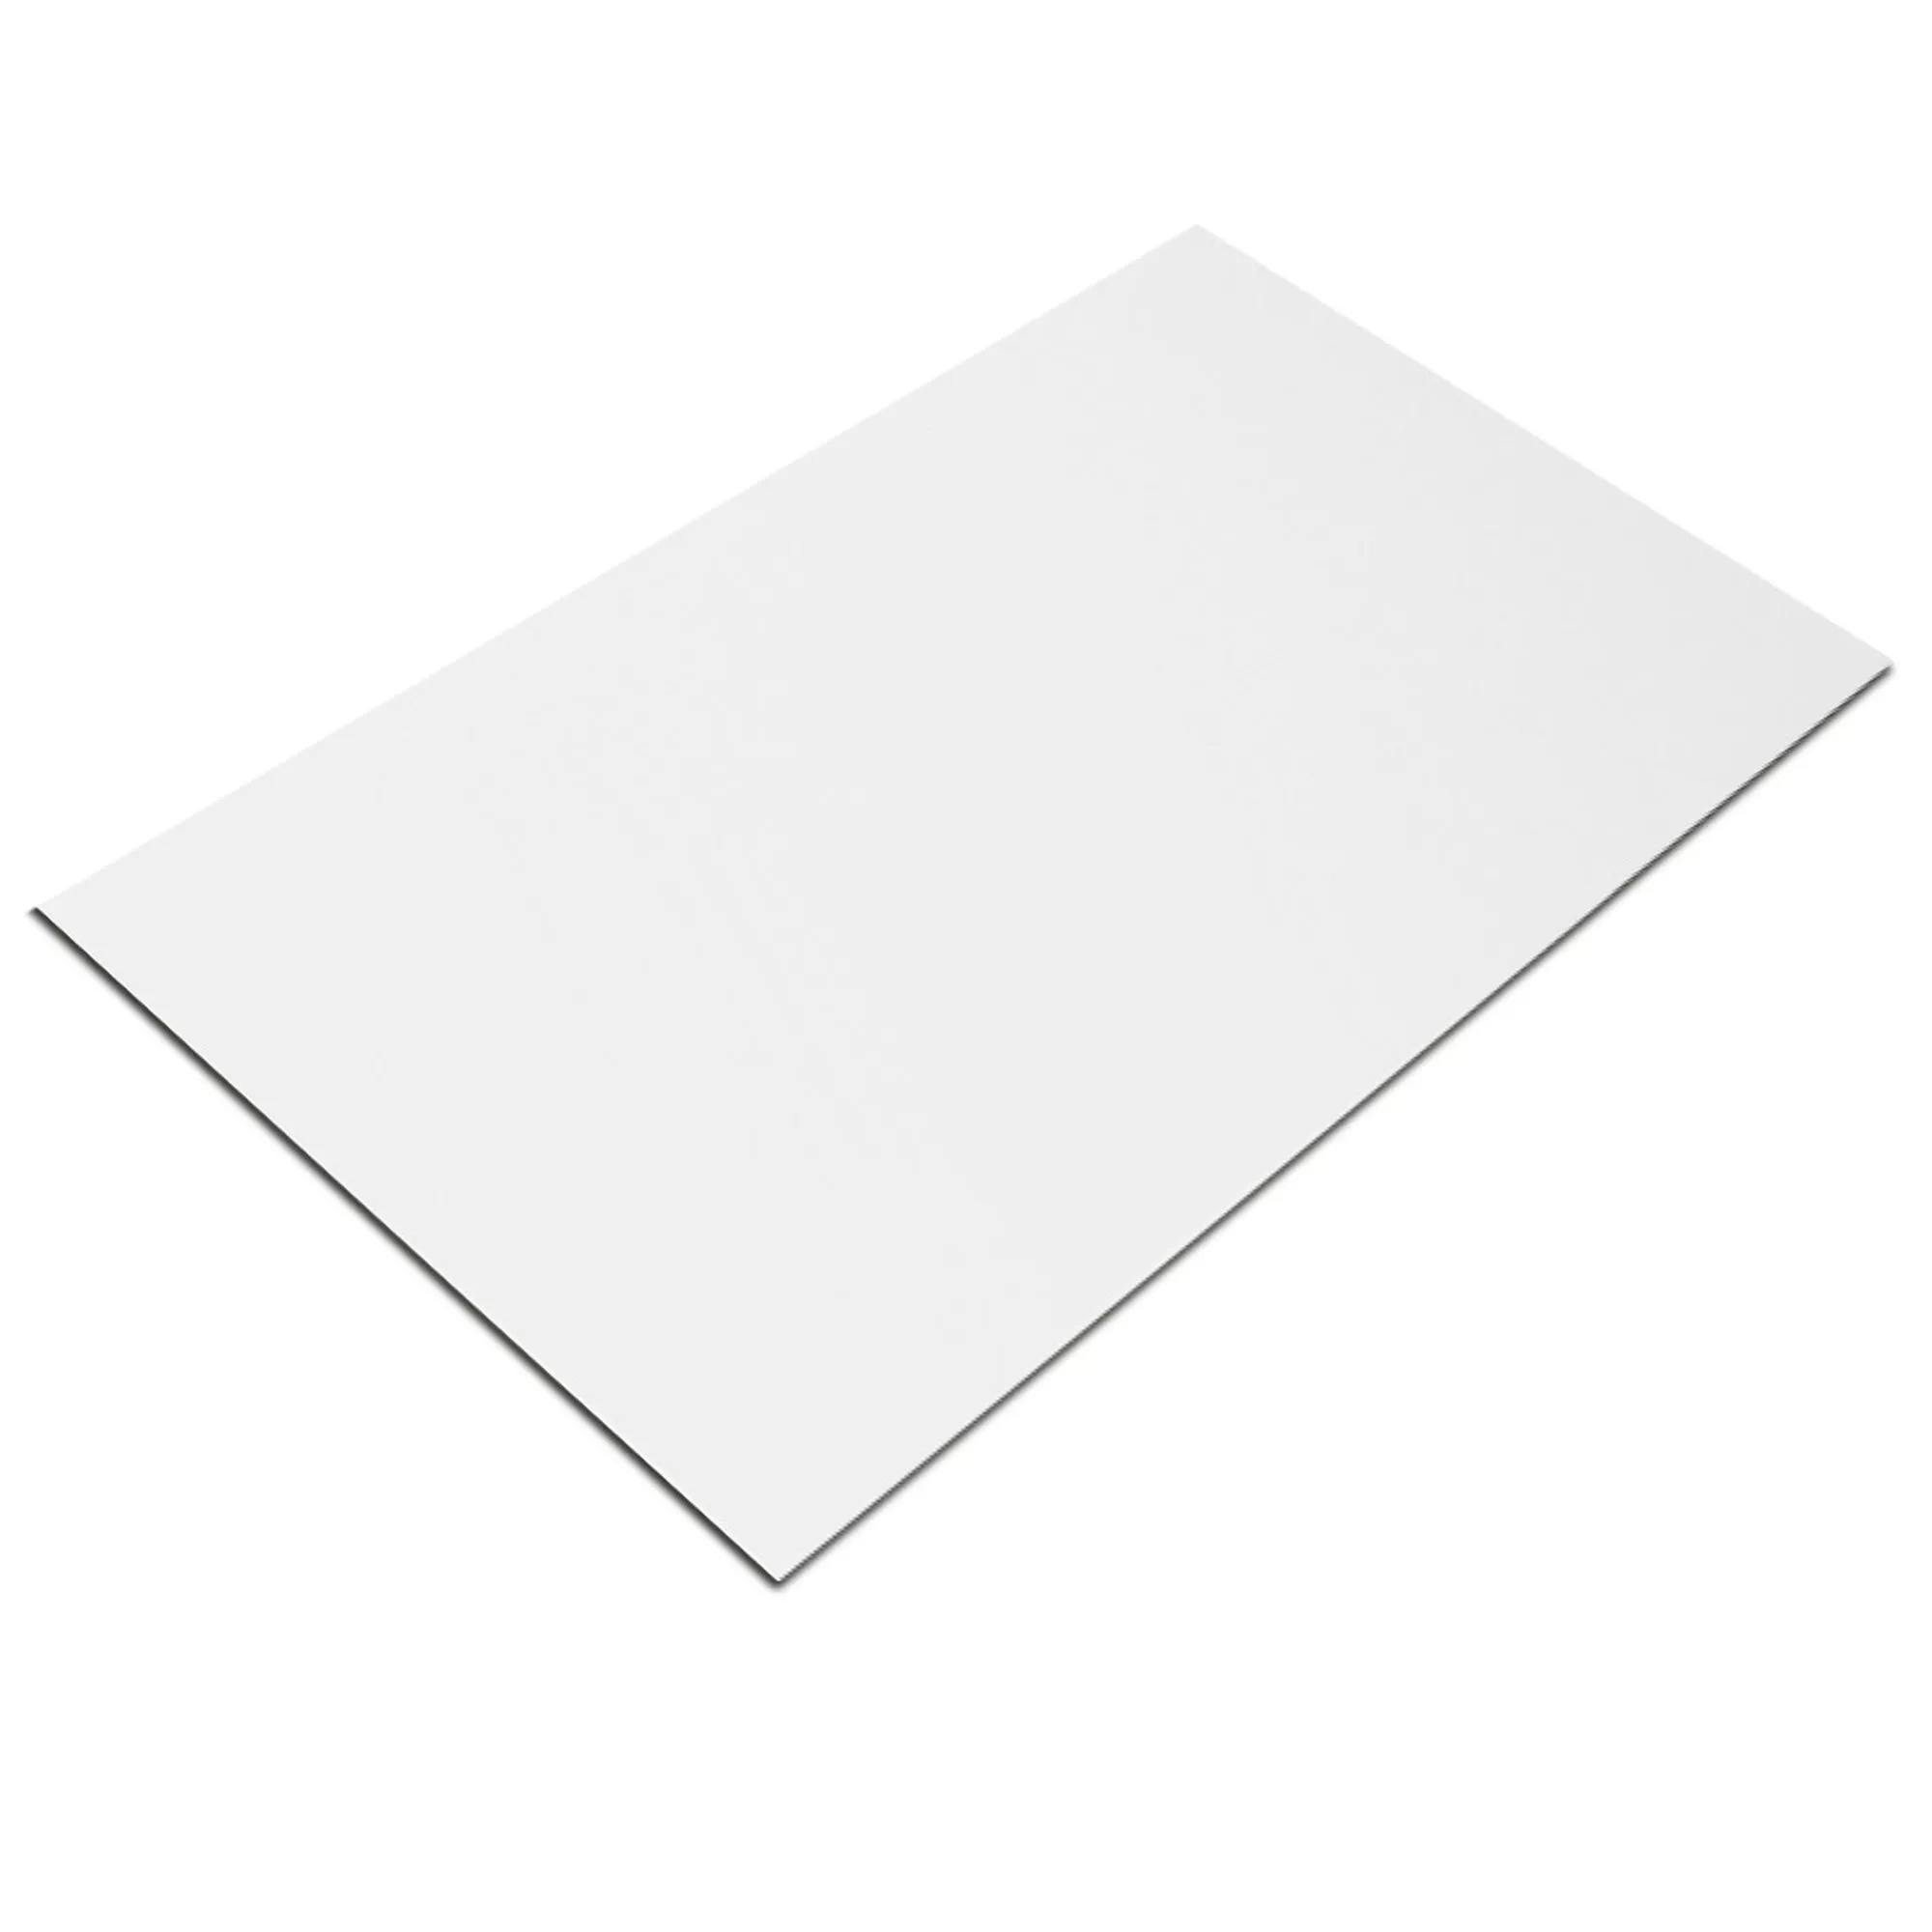 Sample Wall Tiles Fenway White Mat 25x50cm